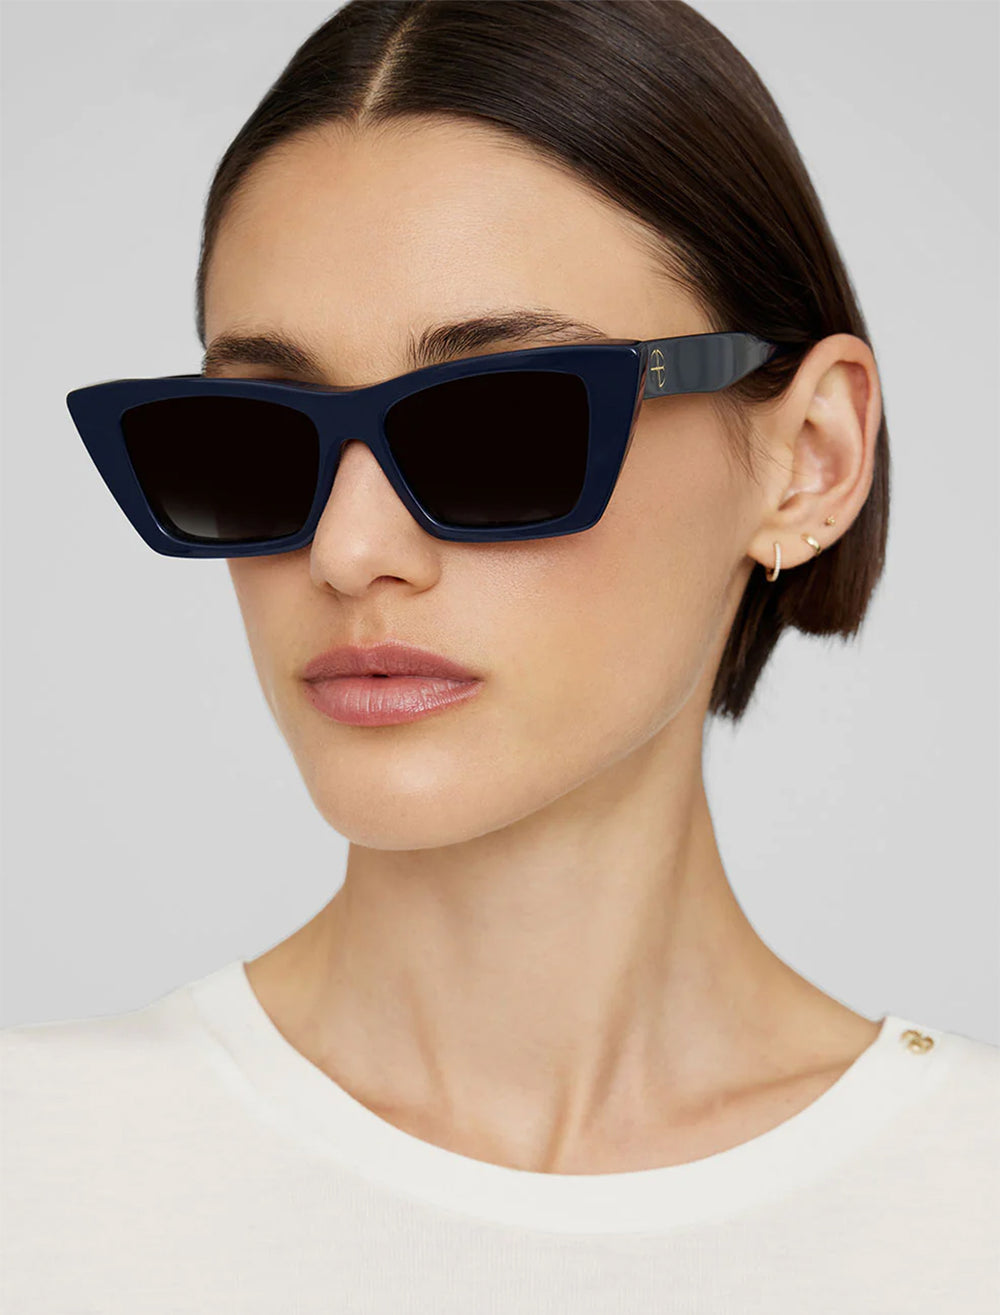 Model wearing Anine Bing's levi sunglasses in navy.